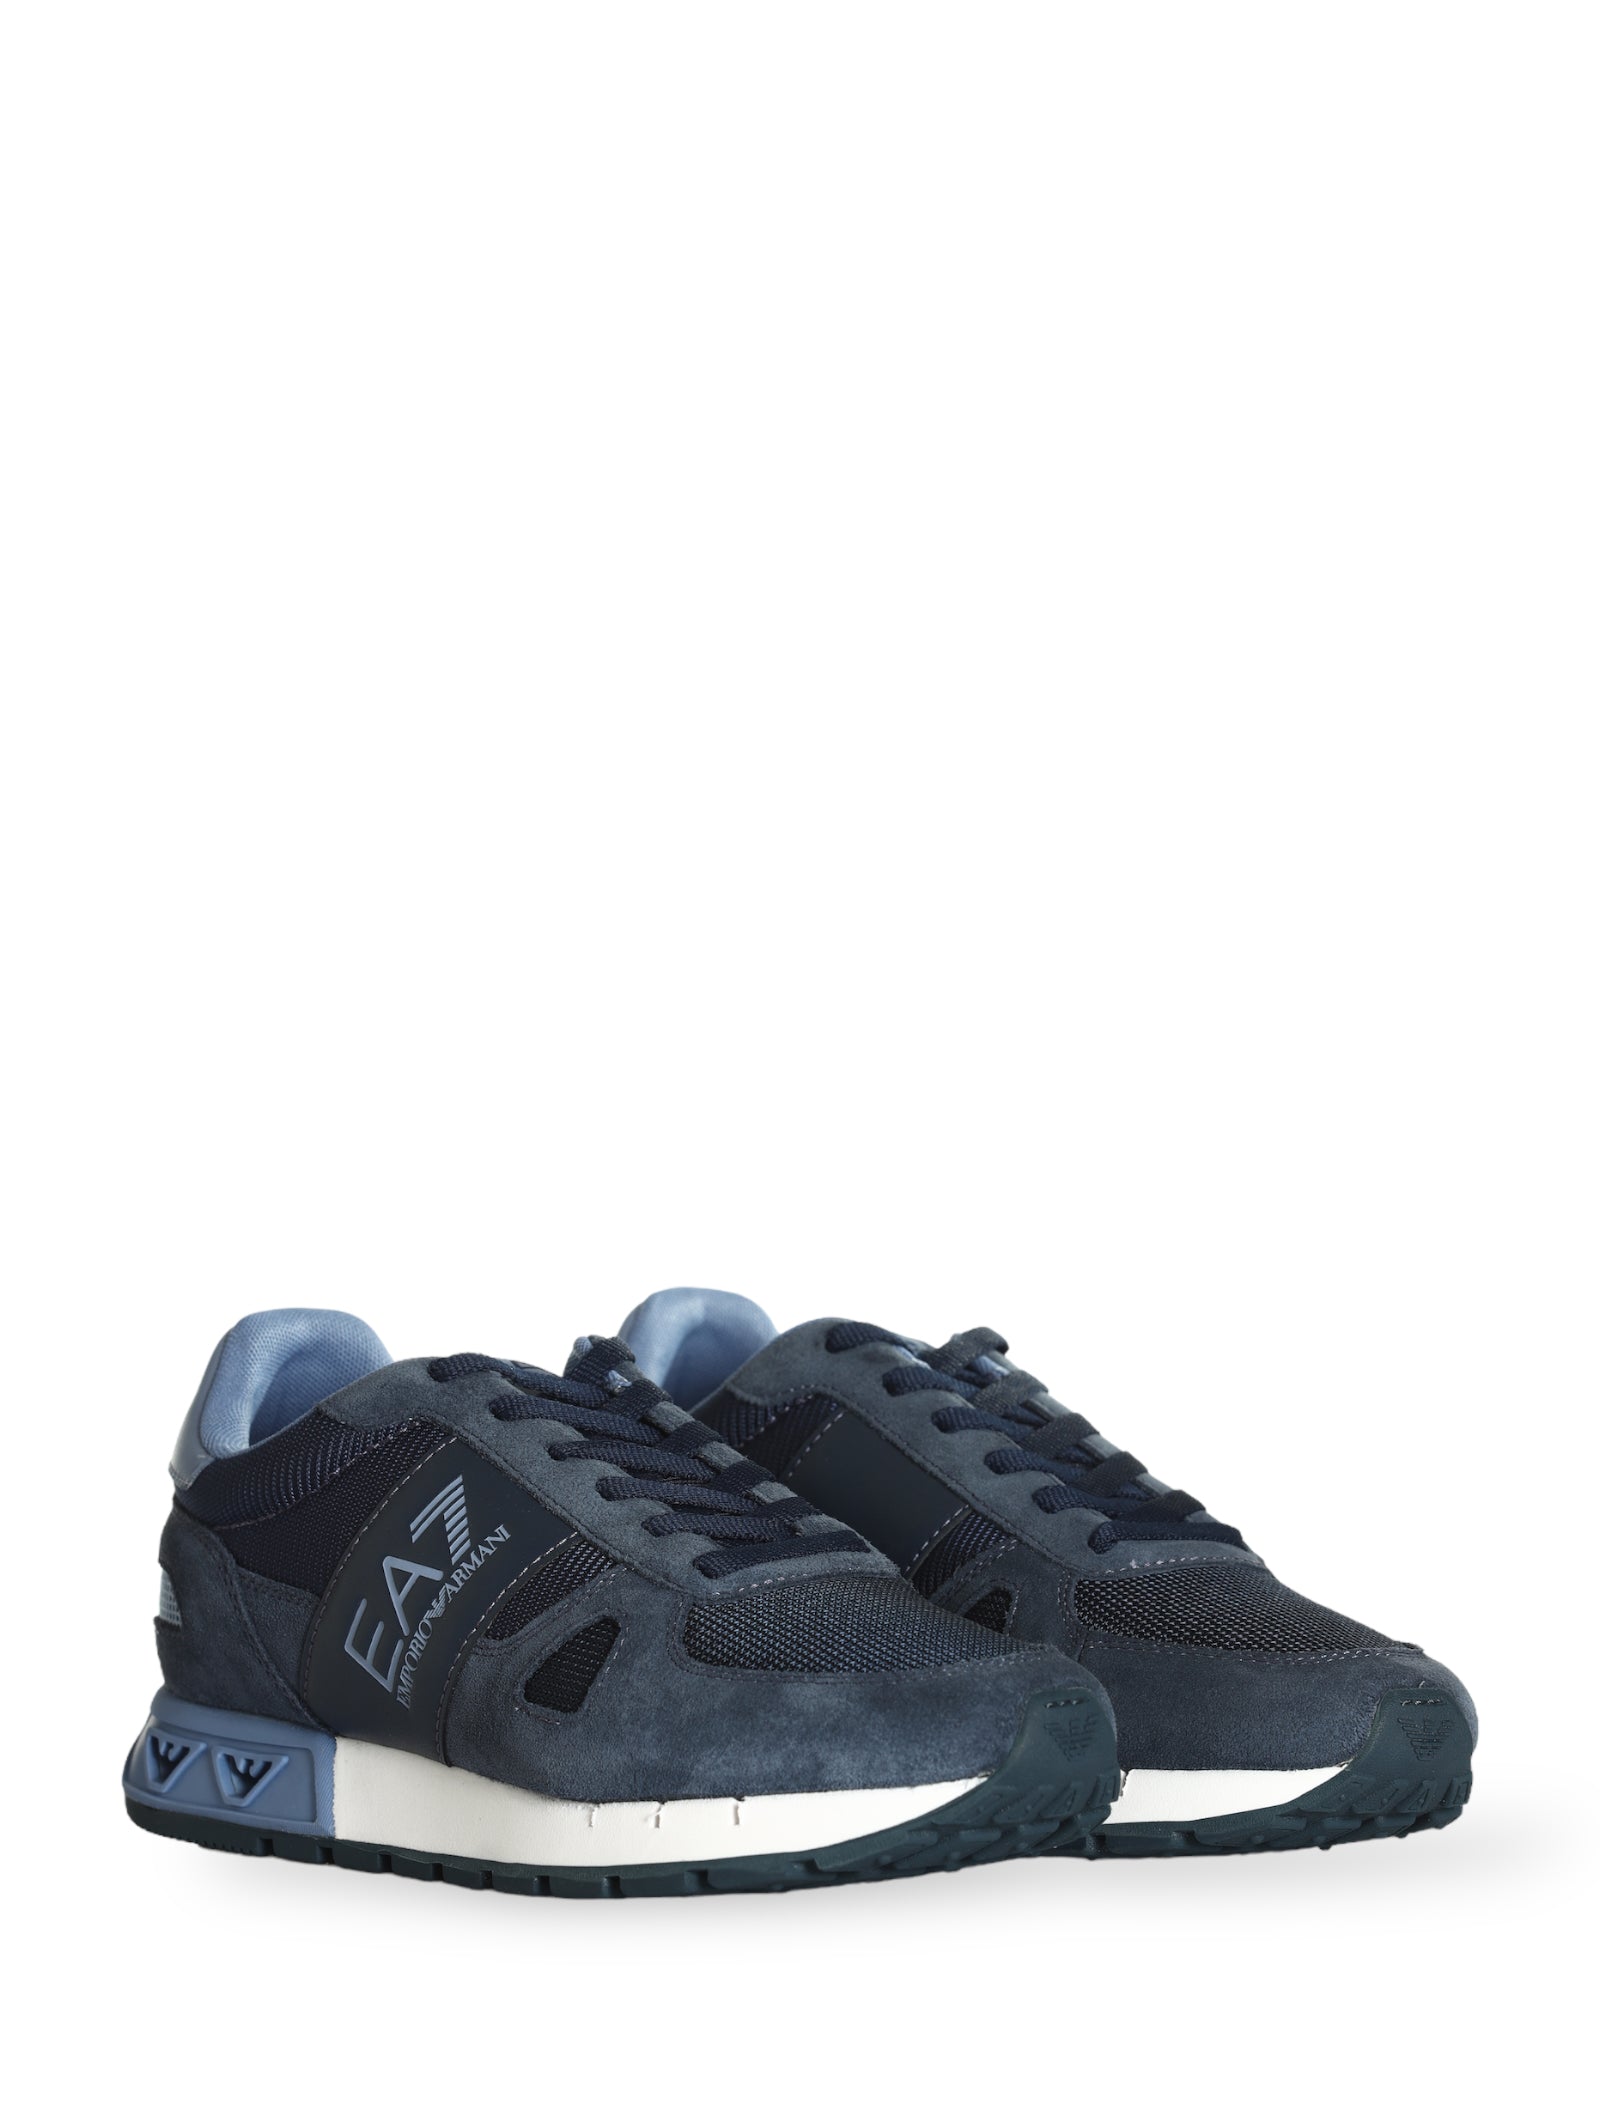 Ea7 Emporio Armani Sneakers X8x151 Black IriS-Country Blue